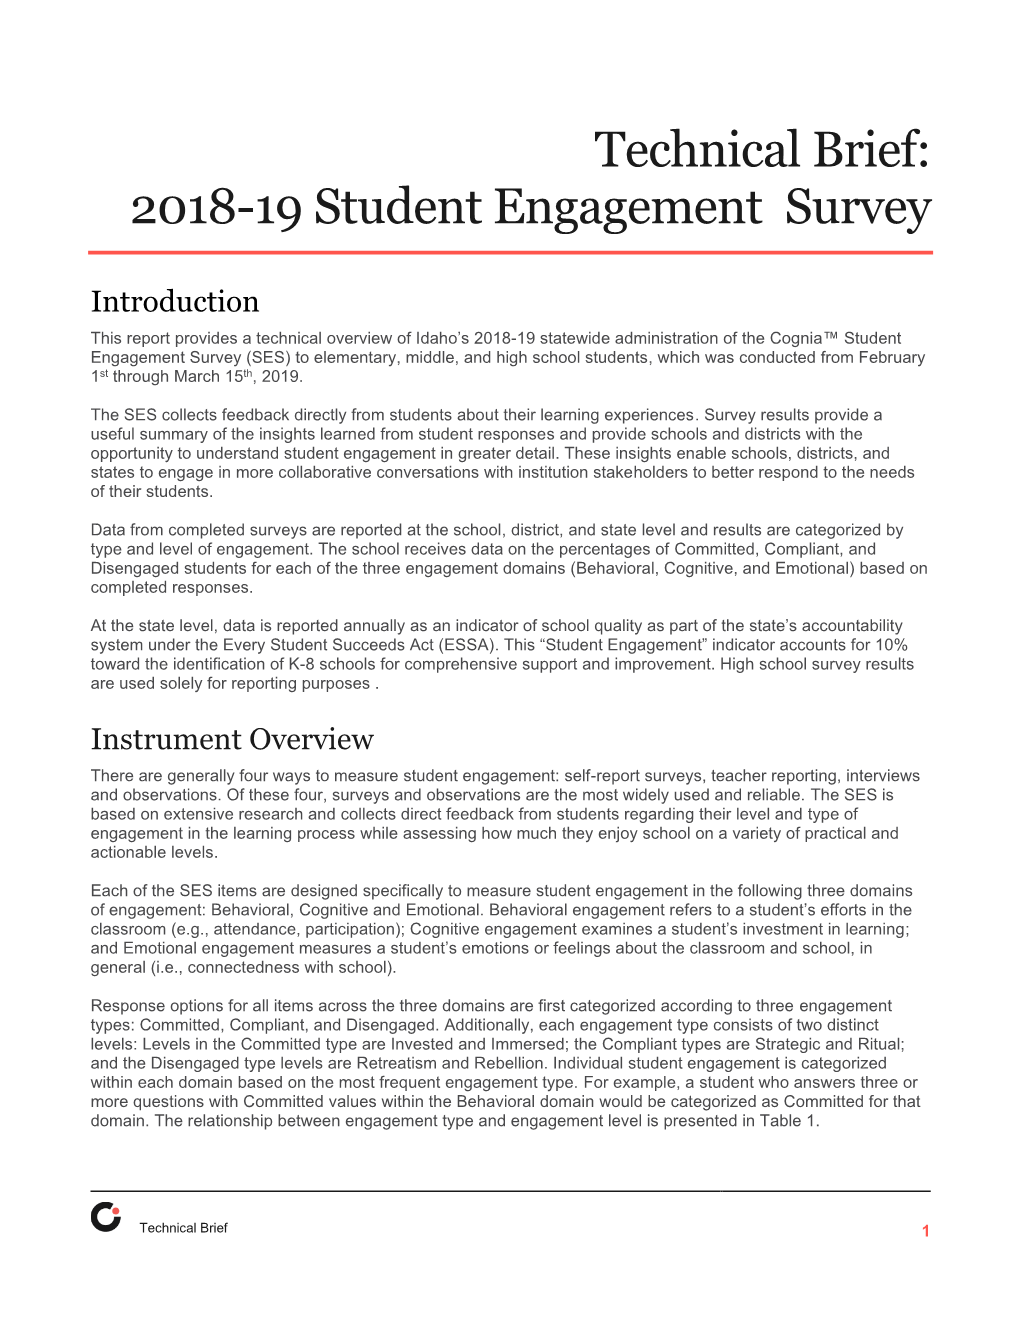 Technical Brief: 2018-19 Student Engagement Survey